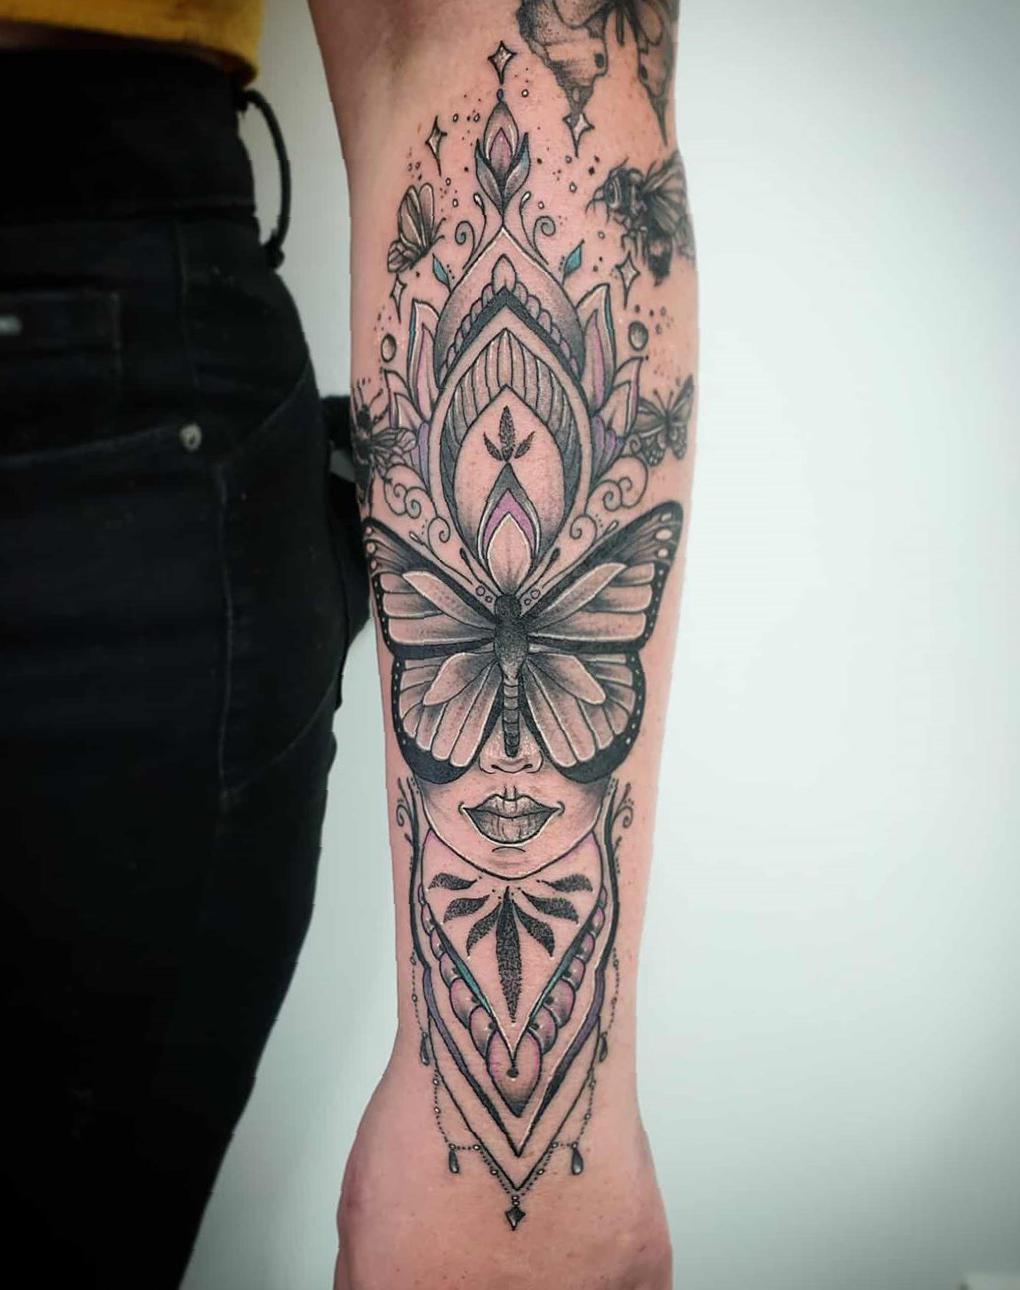 35 Inspiring Arm Tattoo Design Ideas for Women 2020 arm tattoo ideas for women, tattoo ideas for girls, sleeve arm tattoos